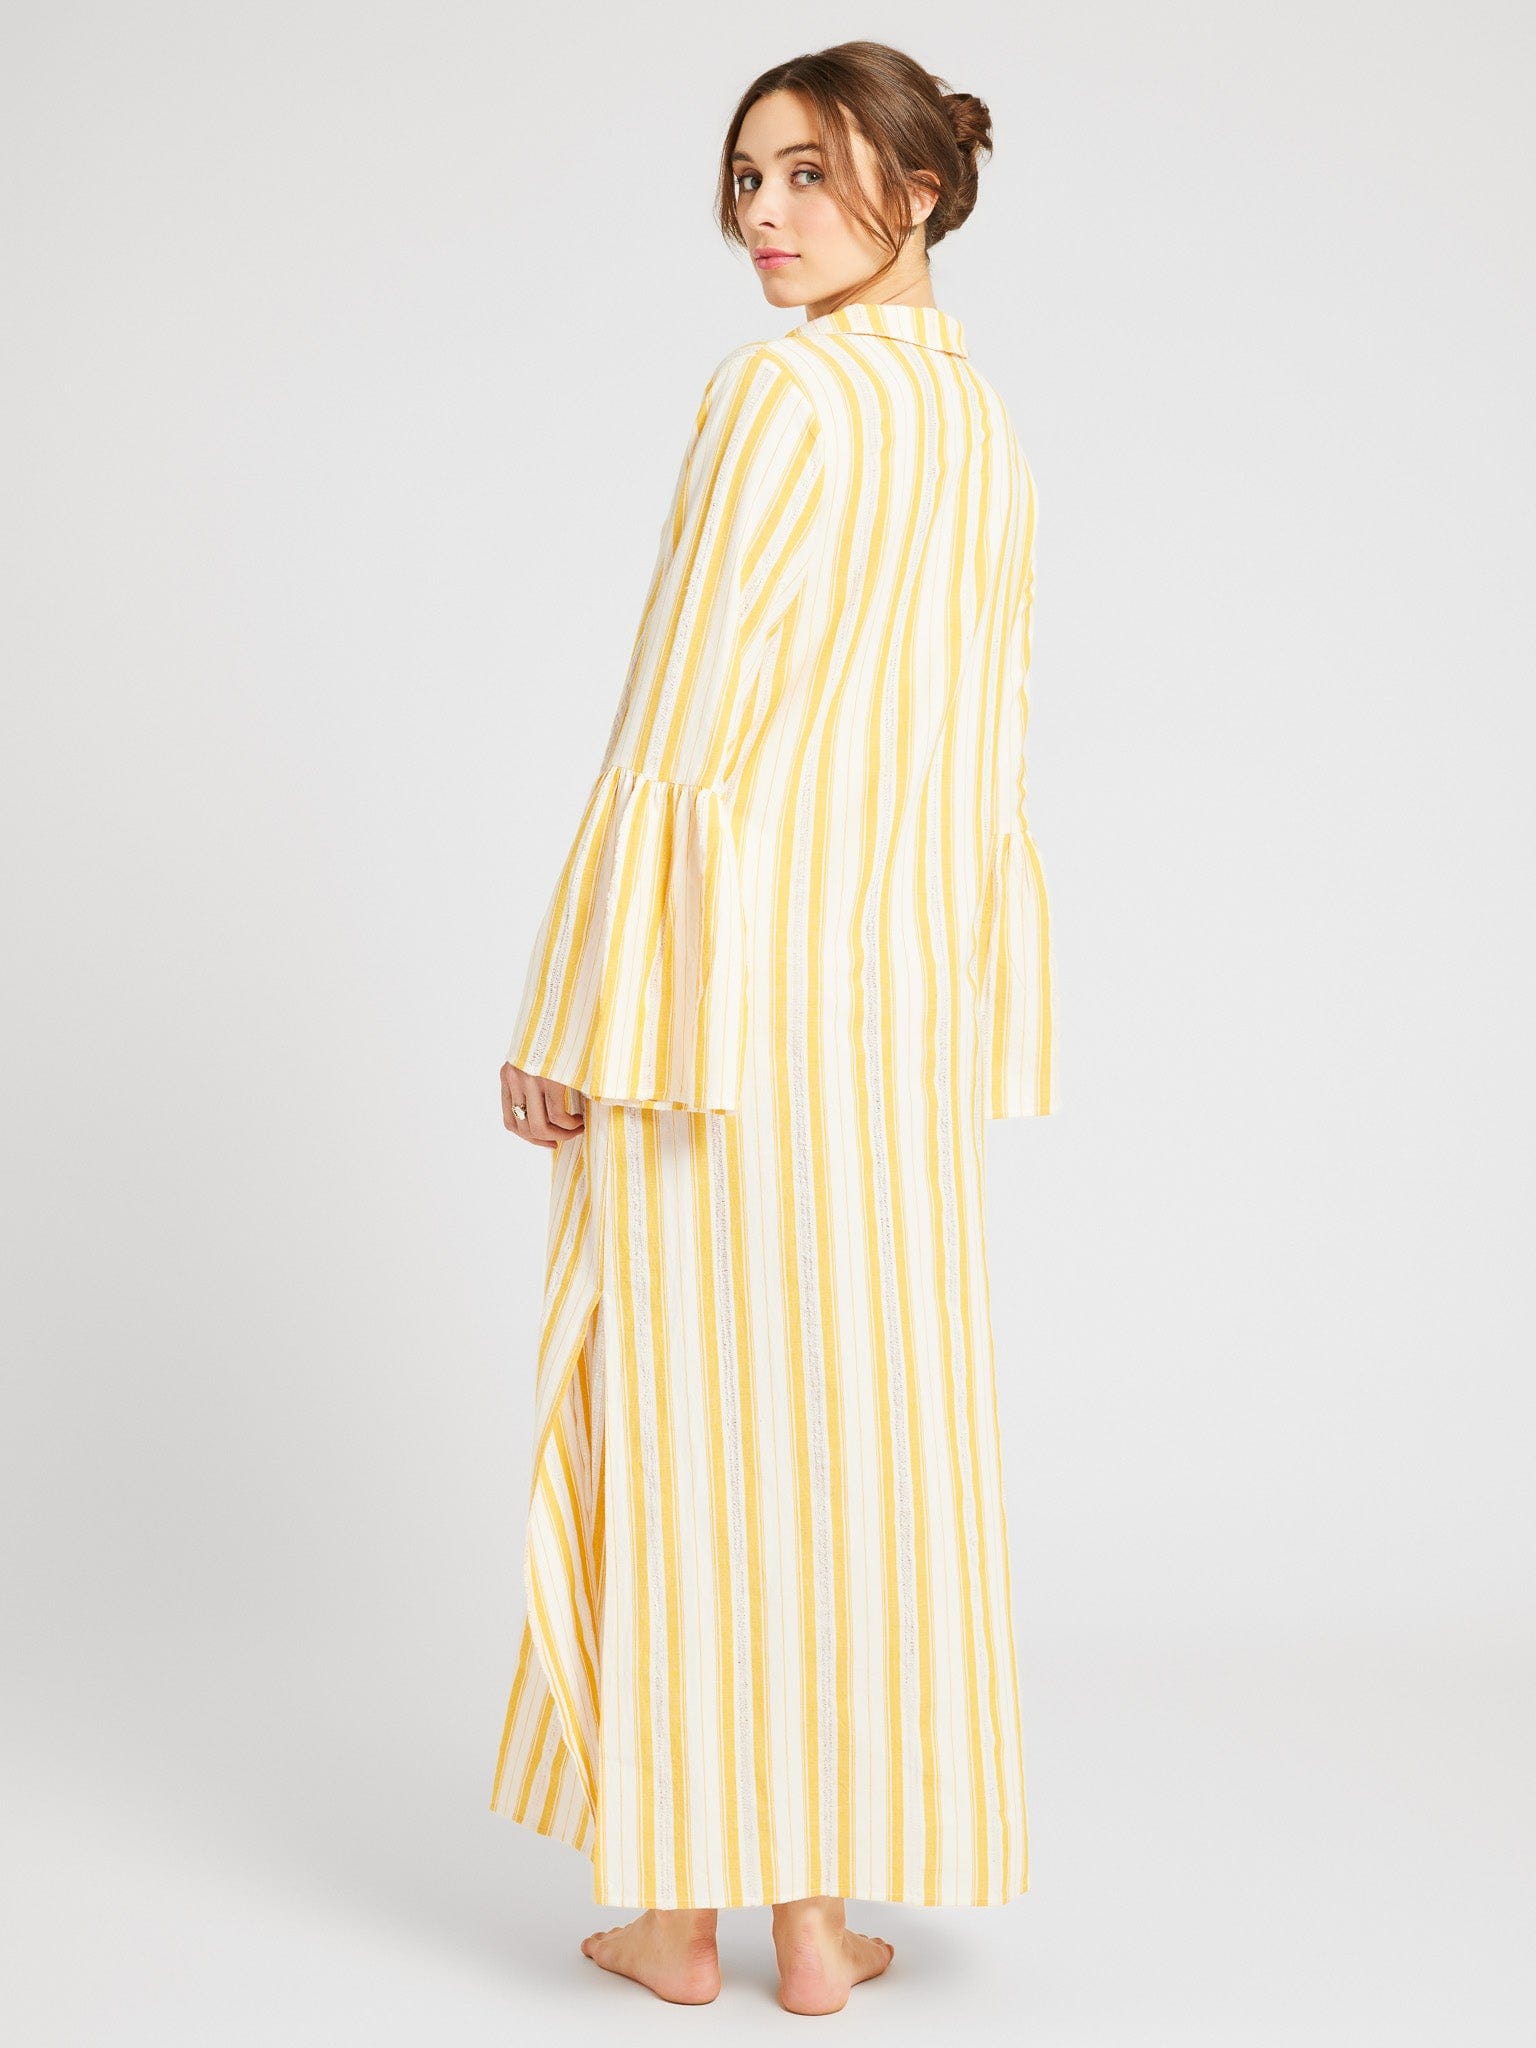 MILLE Clothing Jacqueline Dress in Citrus Stripe